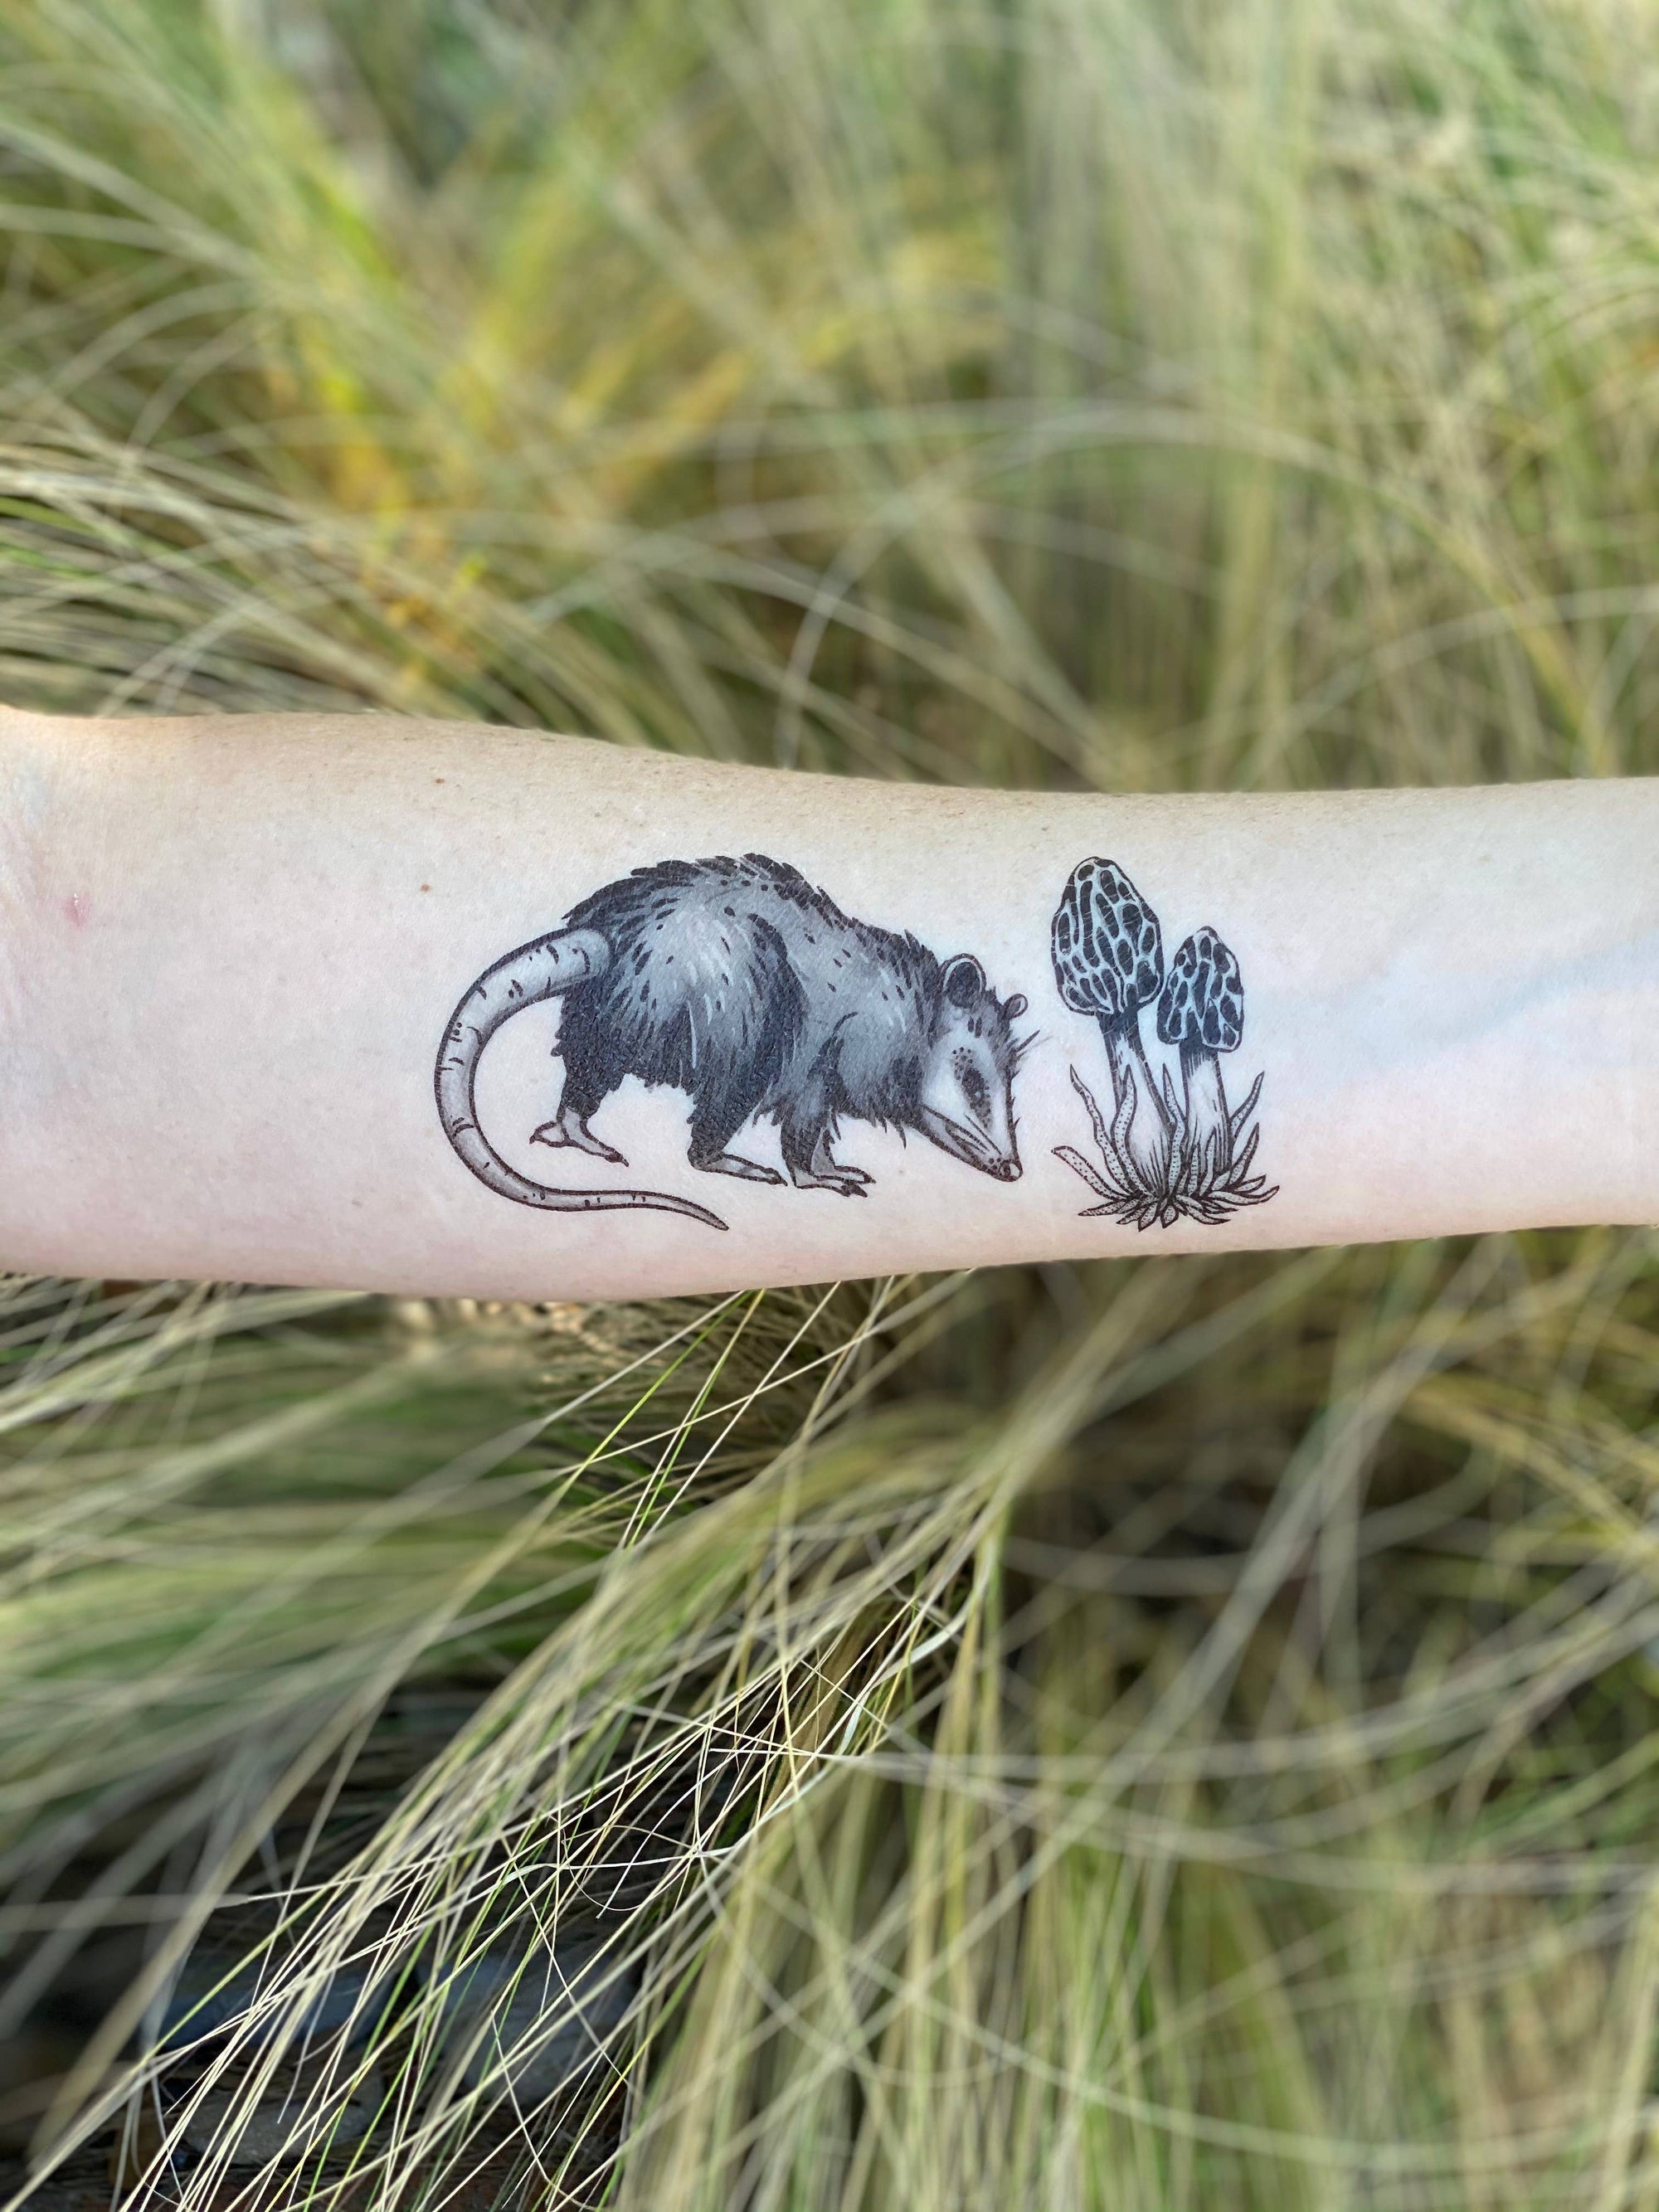 Opossum Temporary Tattoo